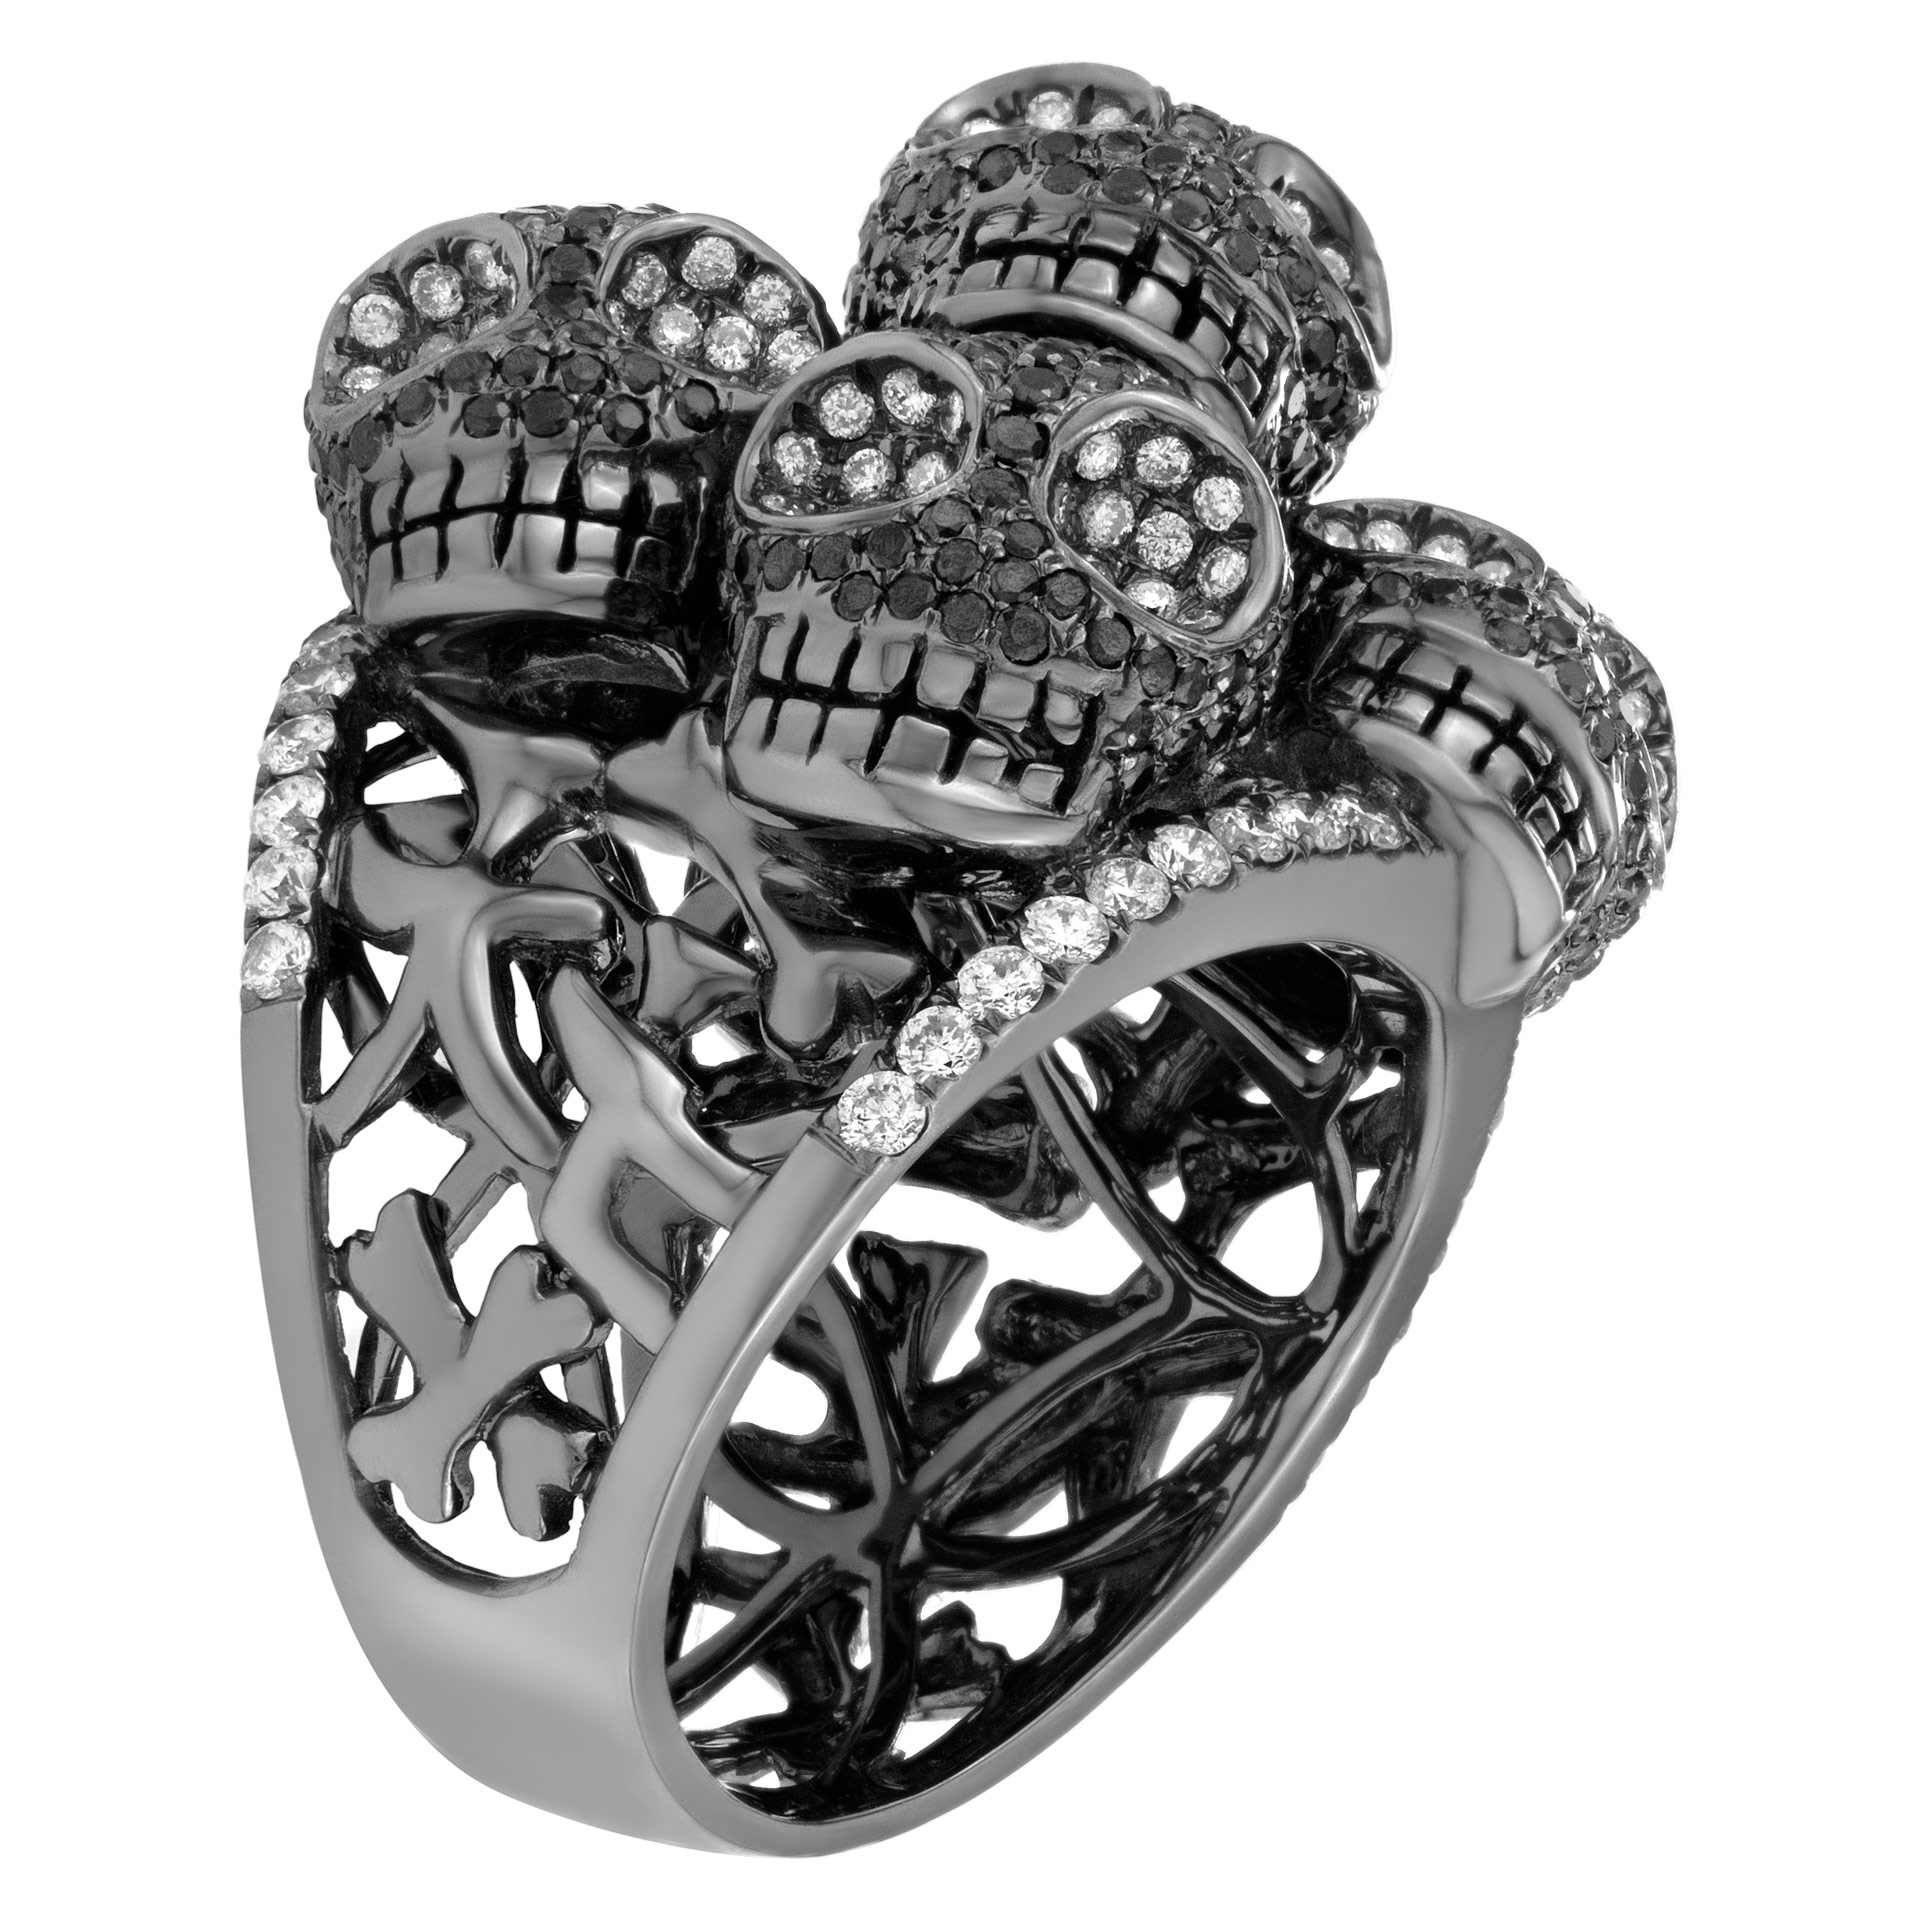 Skulls ring in 18K PVD white gold &black diamonds. 4.34 carats